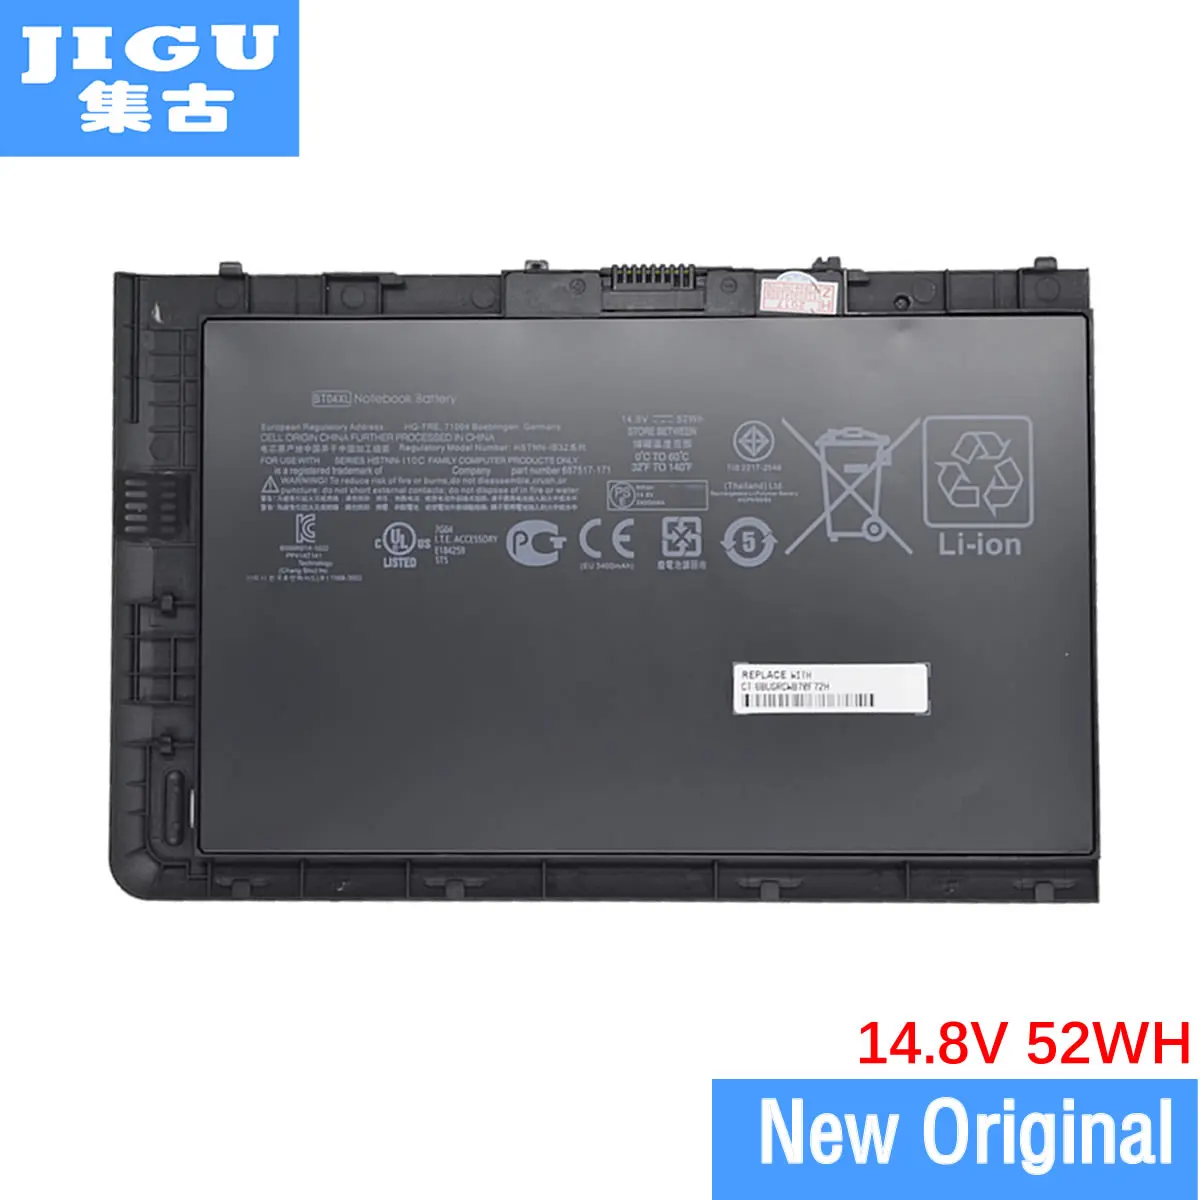 

JIGU ORIGNAL BT04XL Laptop Battery for HP EliteBook Folio 9470m 14.8V 52Wh Battery BT04XL 687945-001 14.8V 52WH